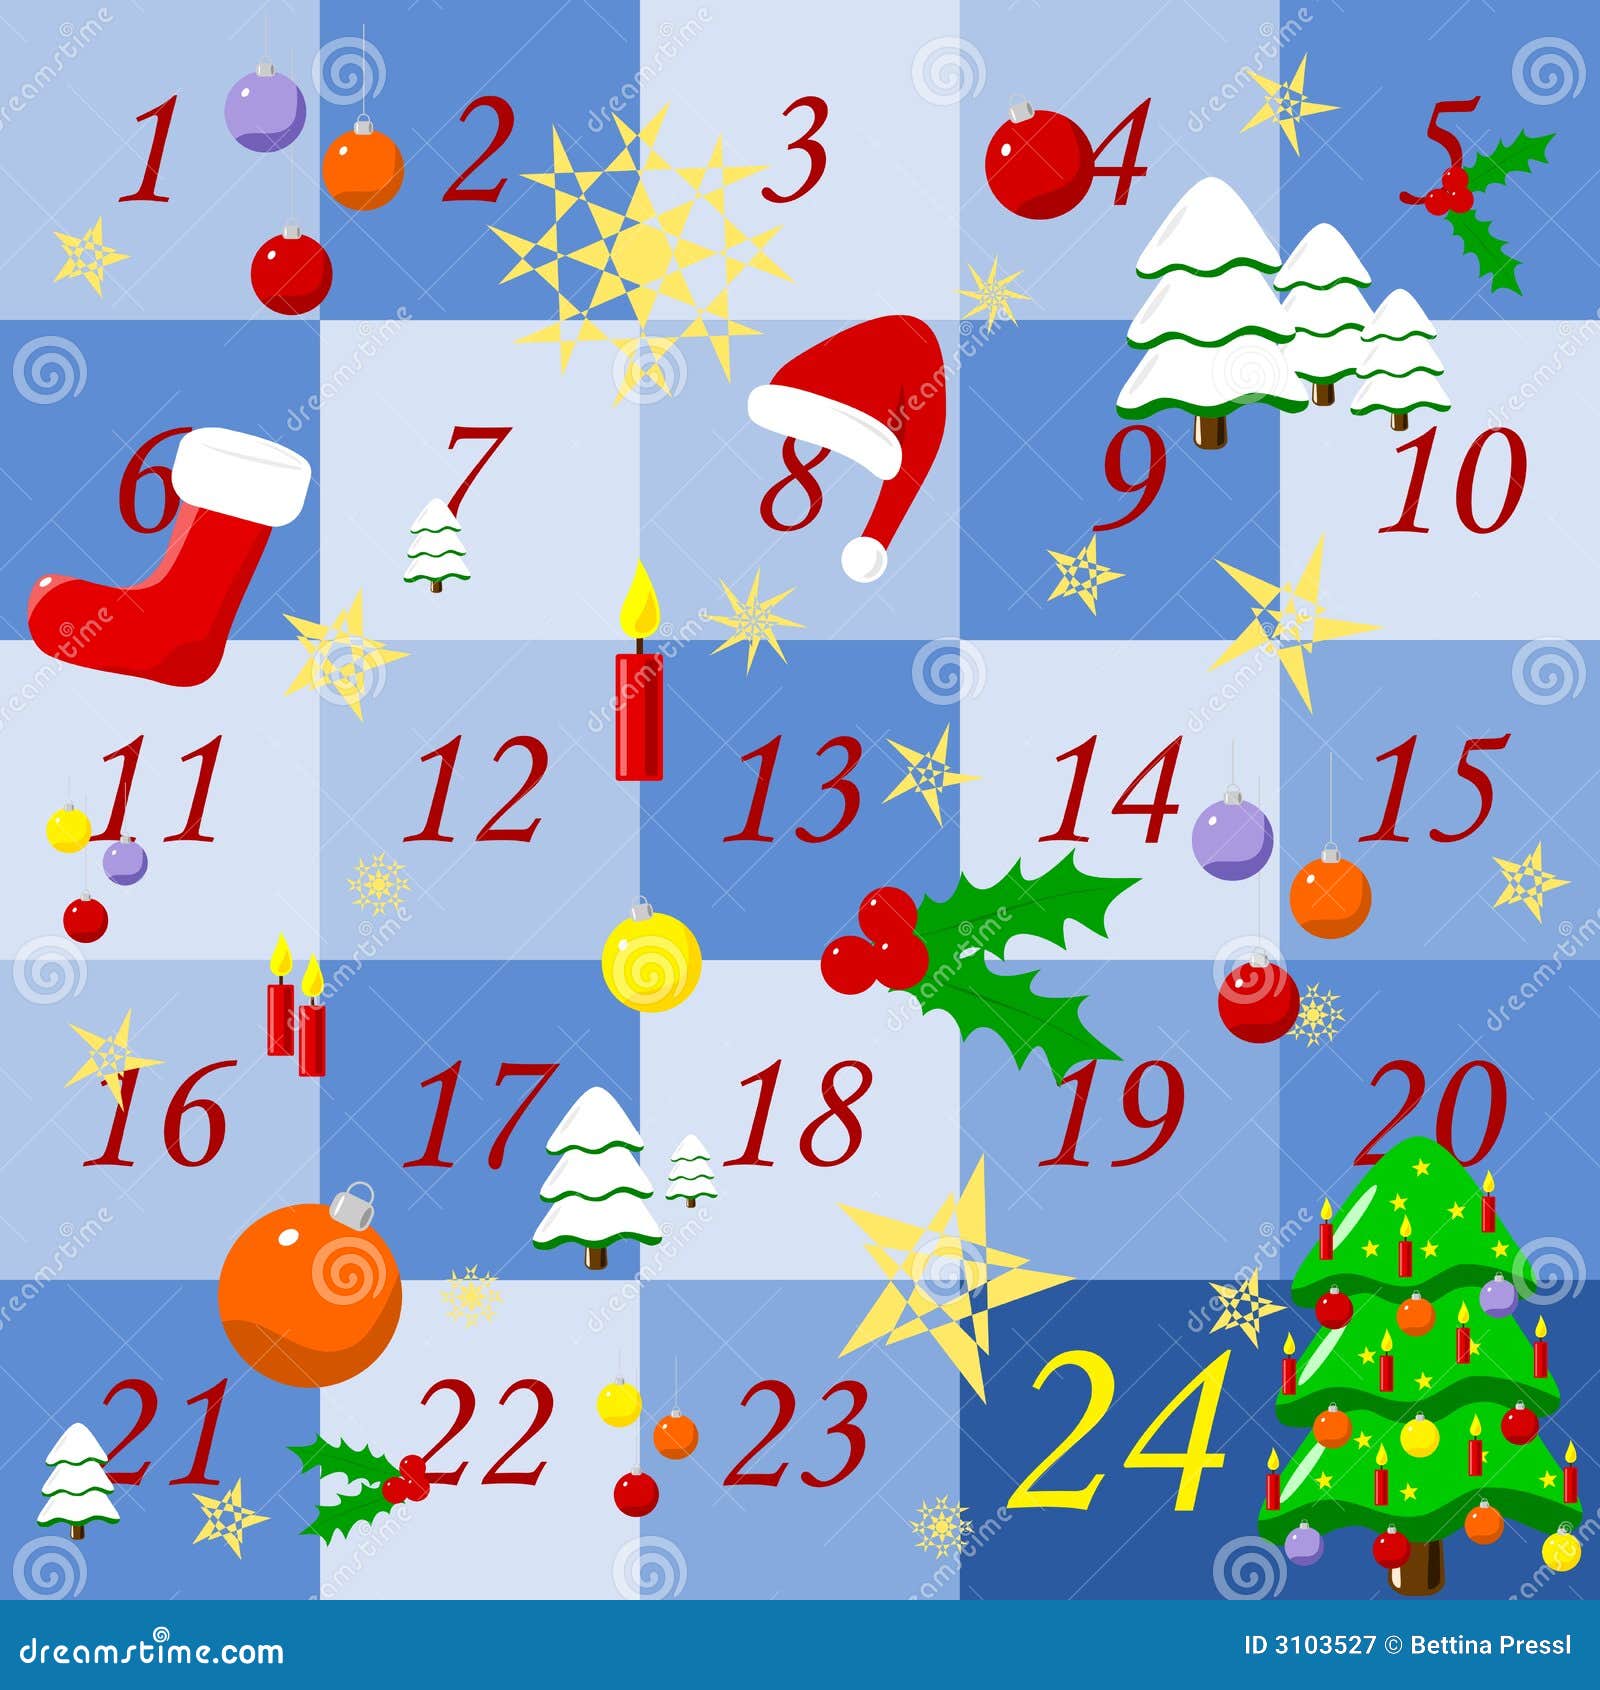 free calendar holiday clip art - photo #40